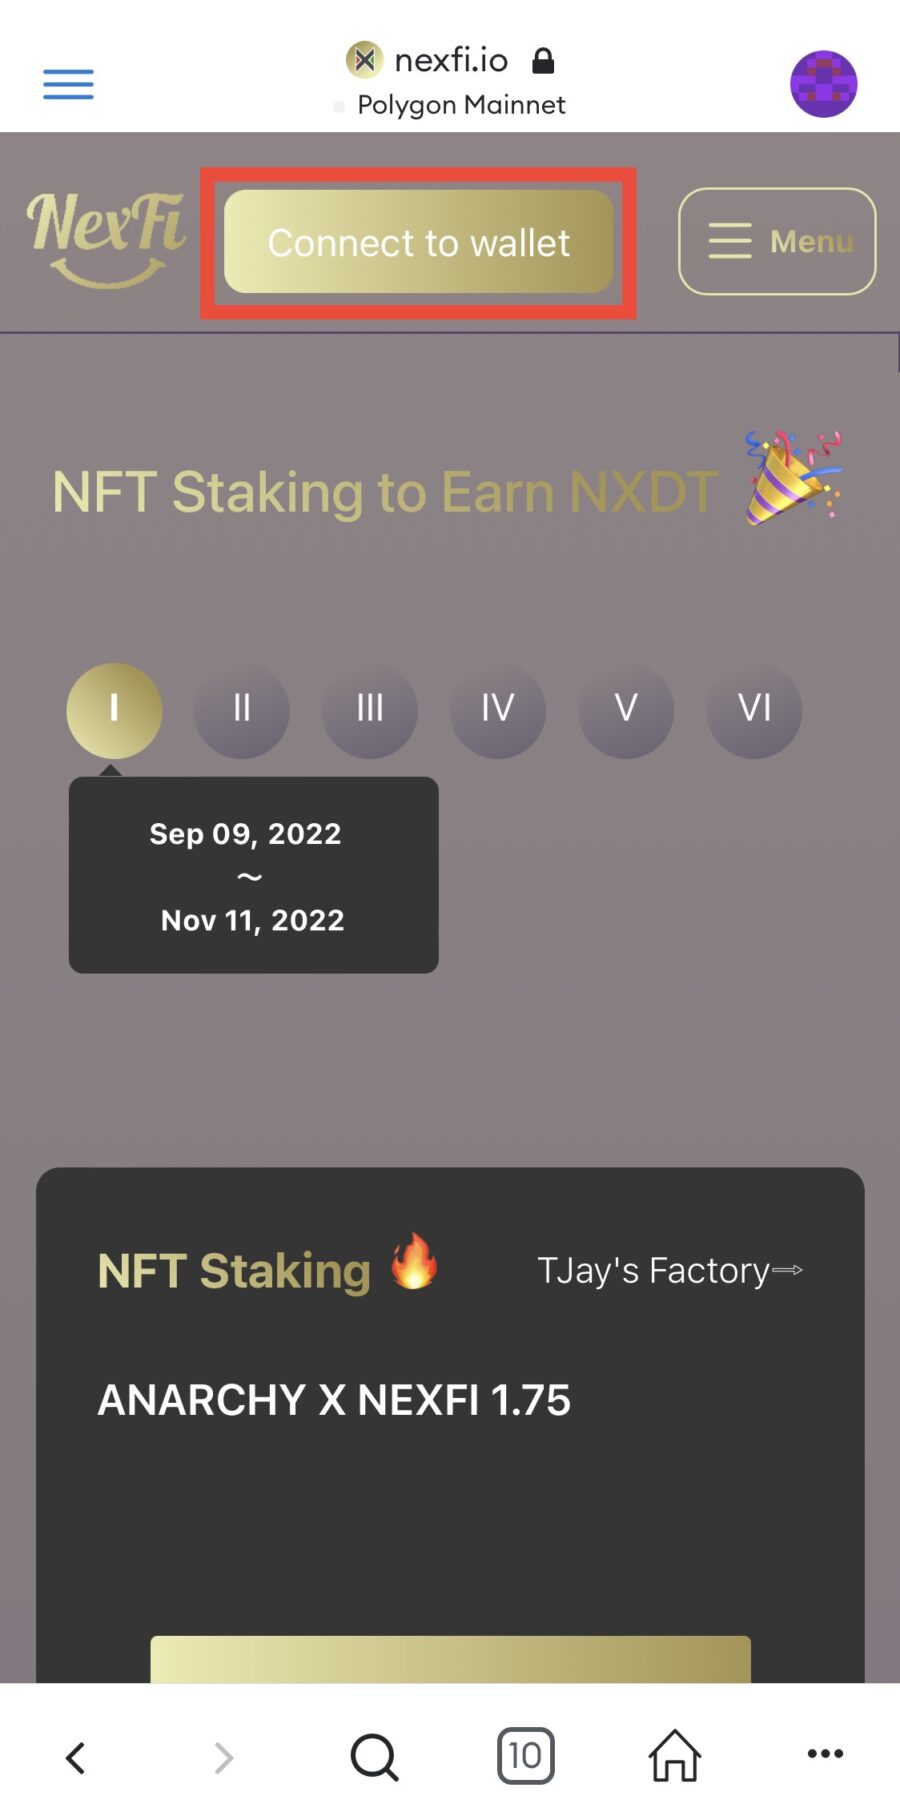 NexFi 2.5-NXDTのステーキング方法